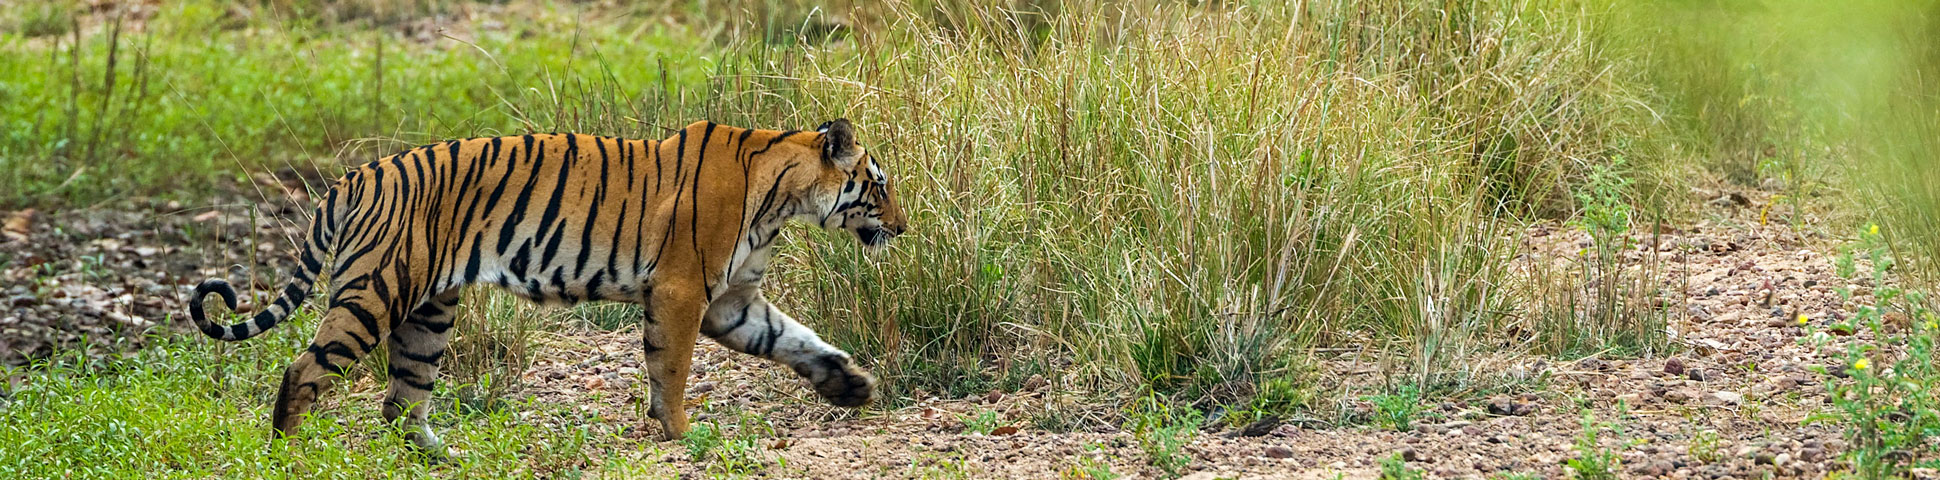 Tiger Trail Safari Tour